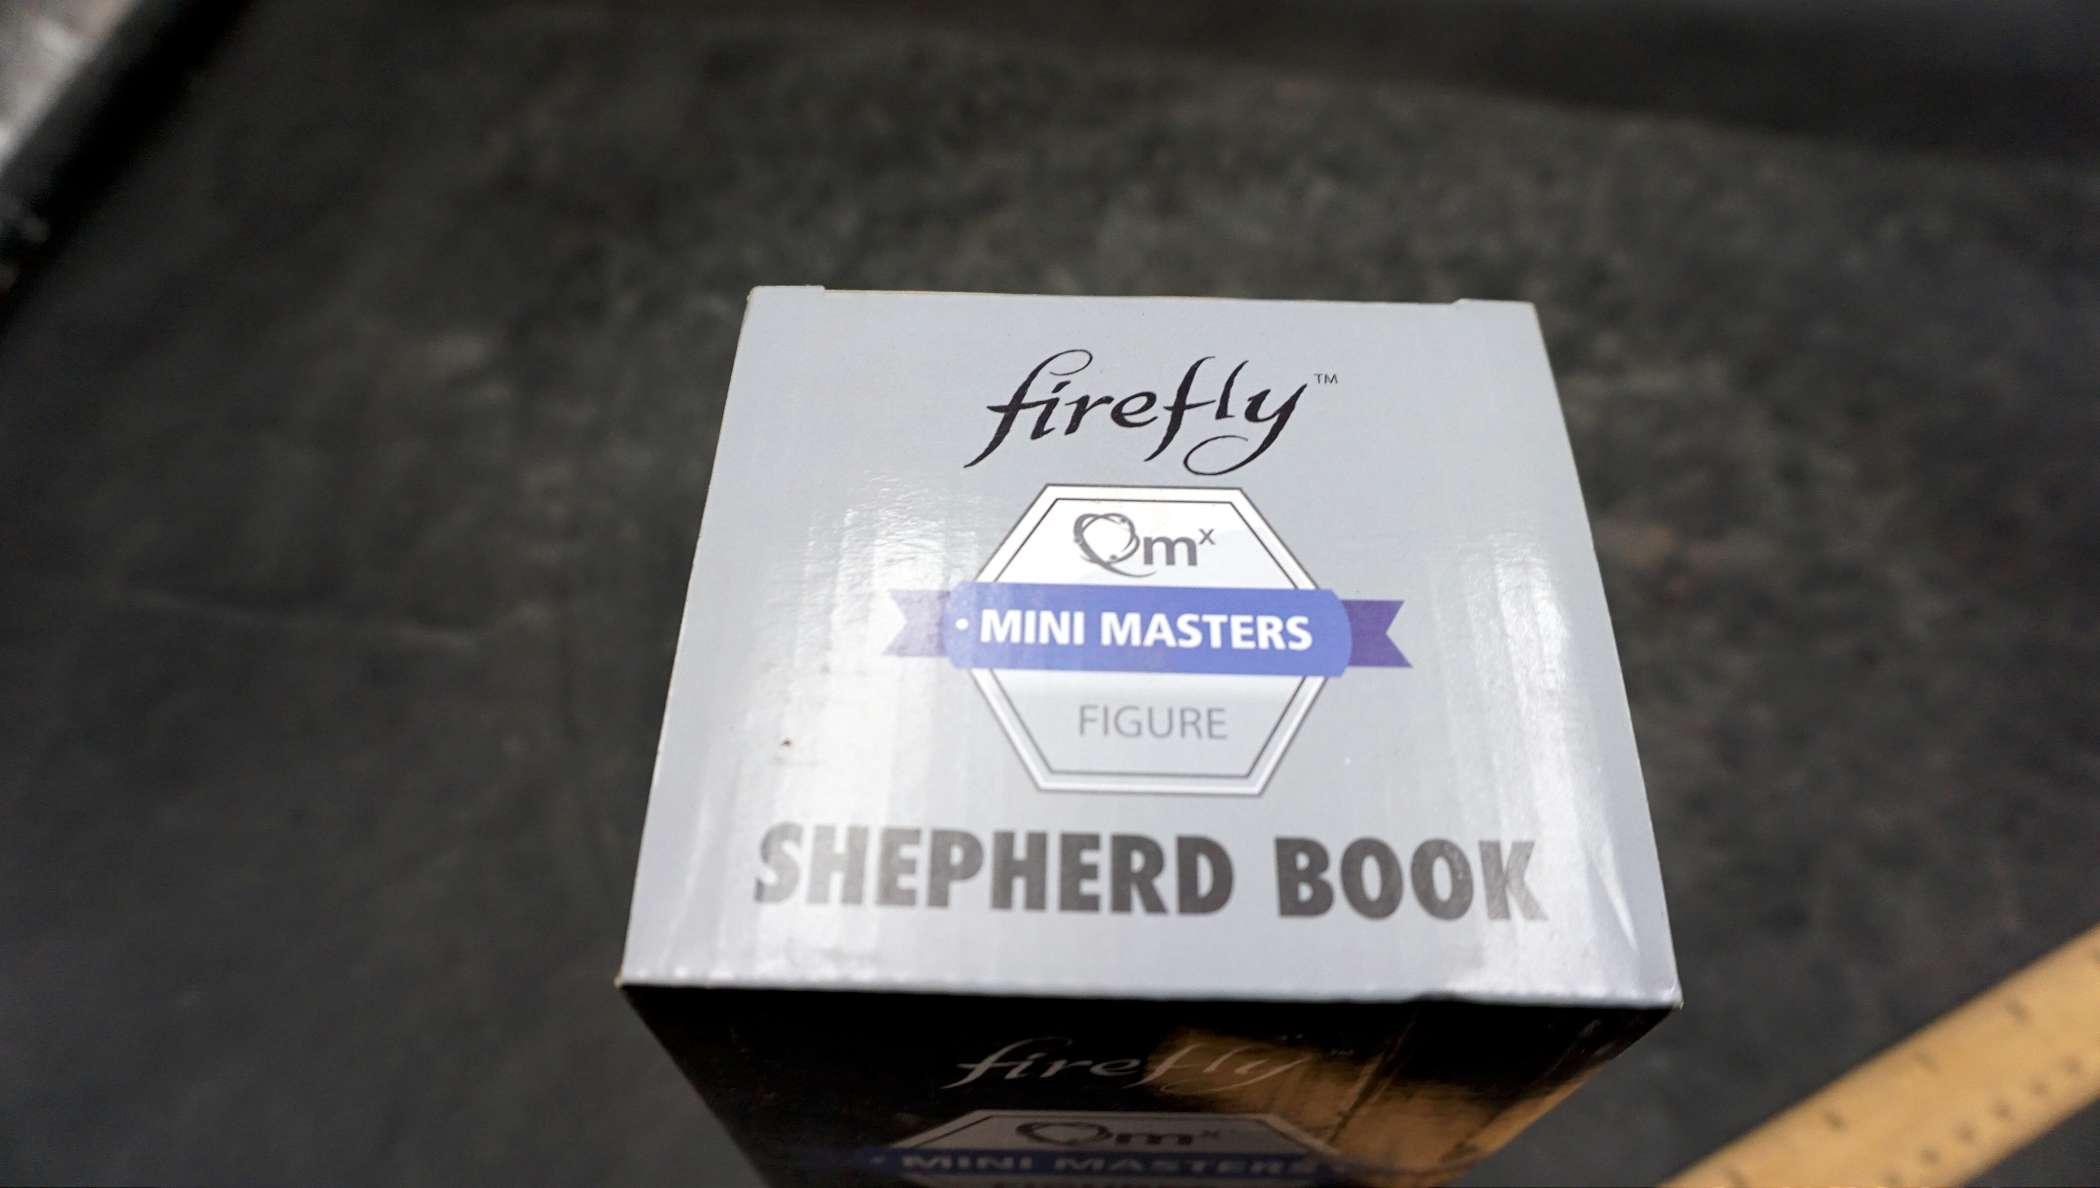 QM Firefly Mini Masters Little Damn Heroes Shepherd Book Figurine